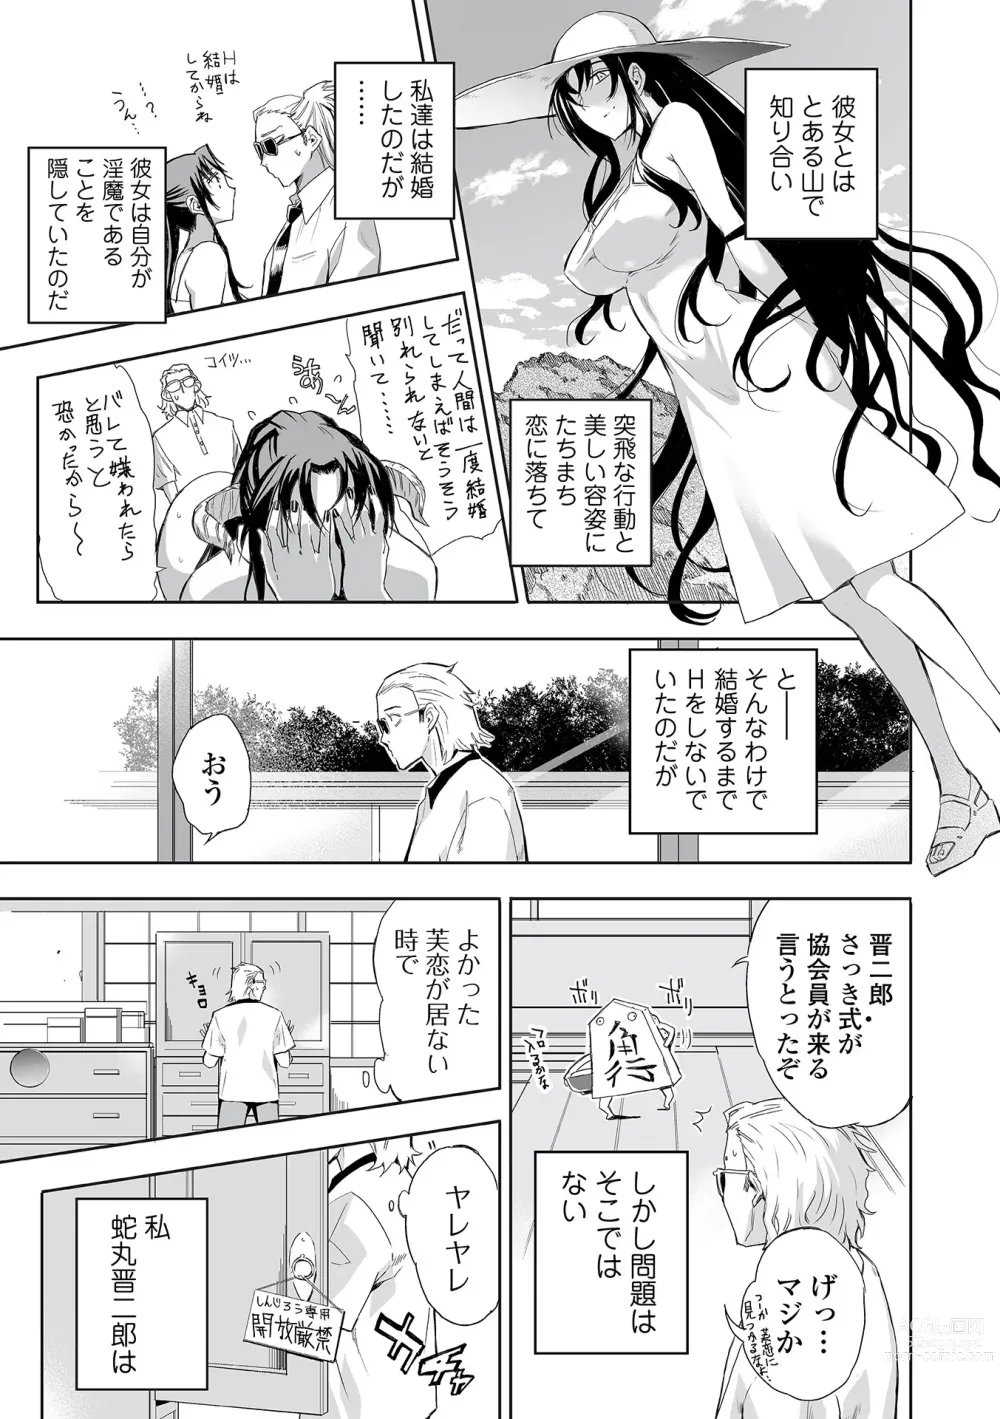 Page 83 of manga Web Comic Toutetsu Vol. 82